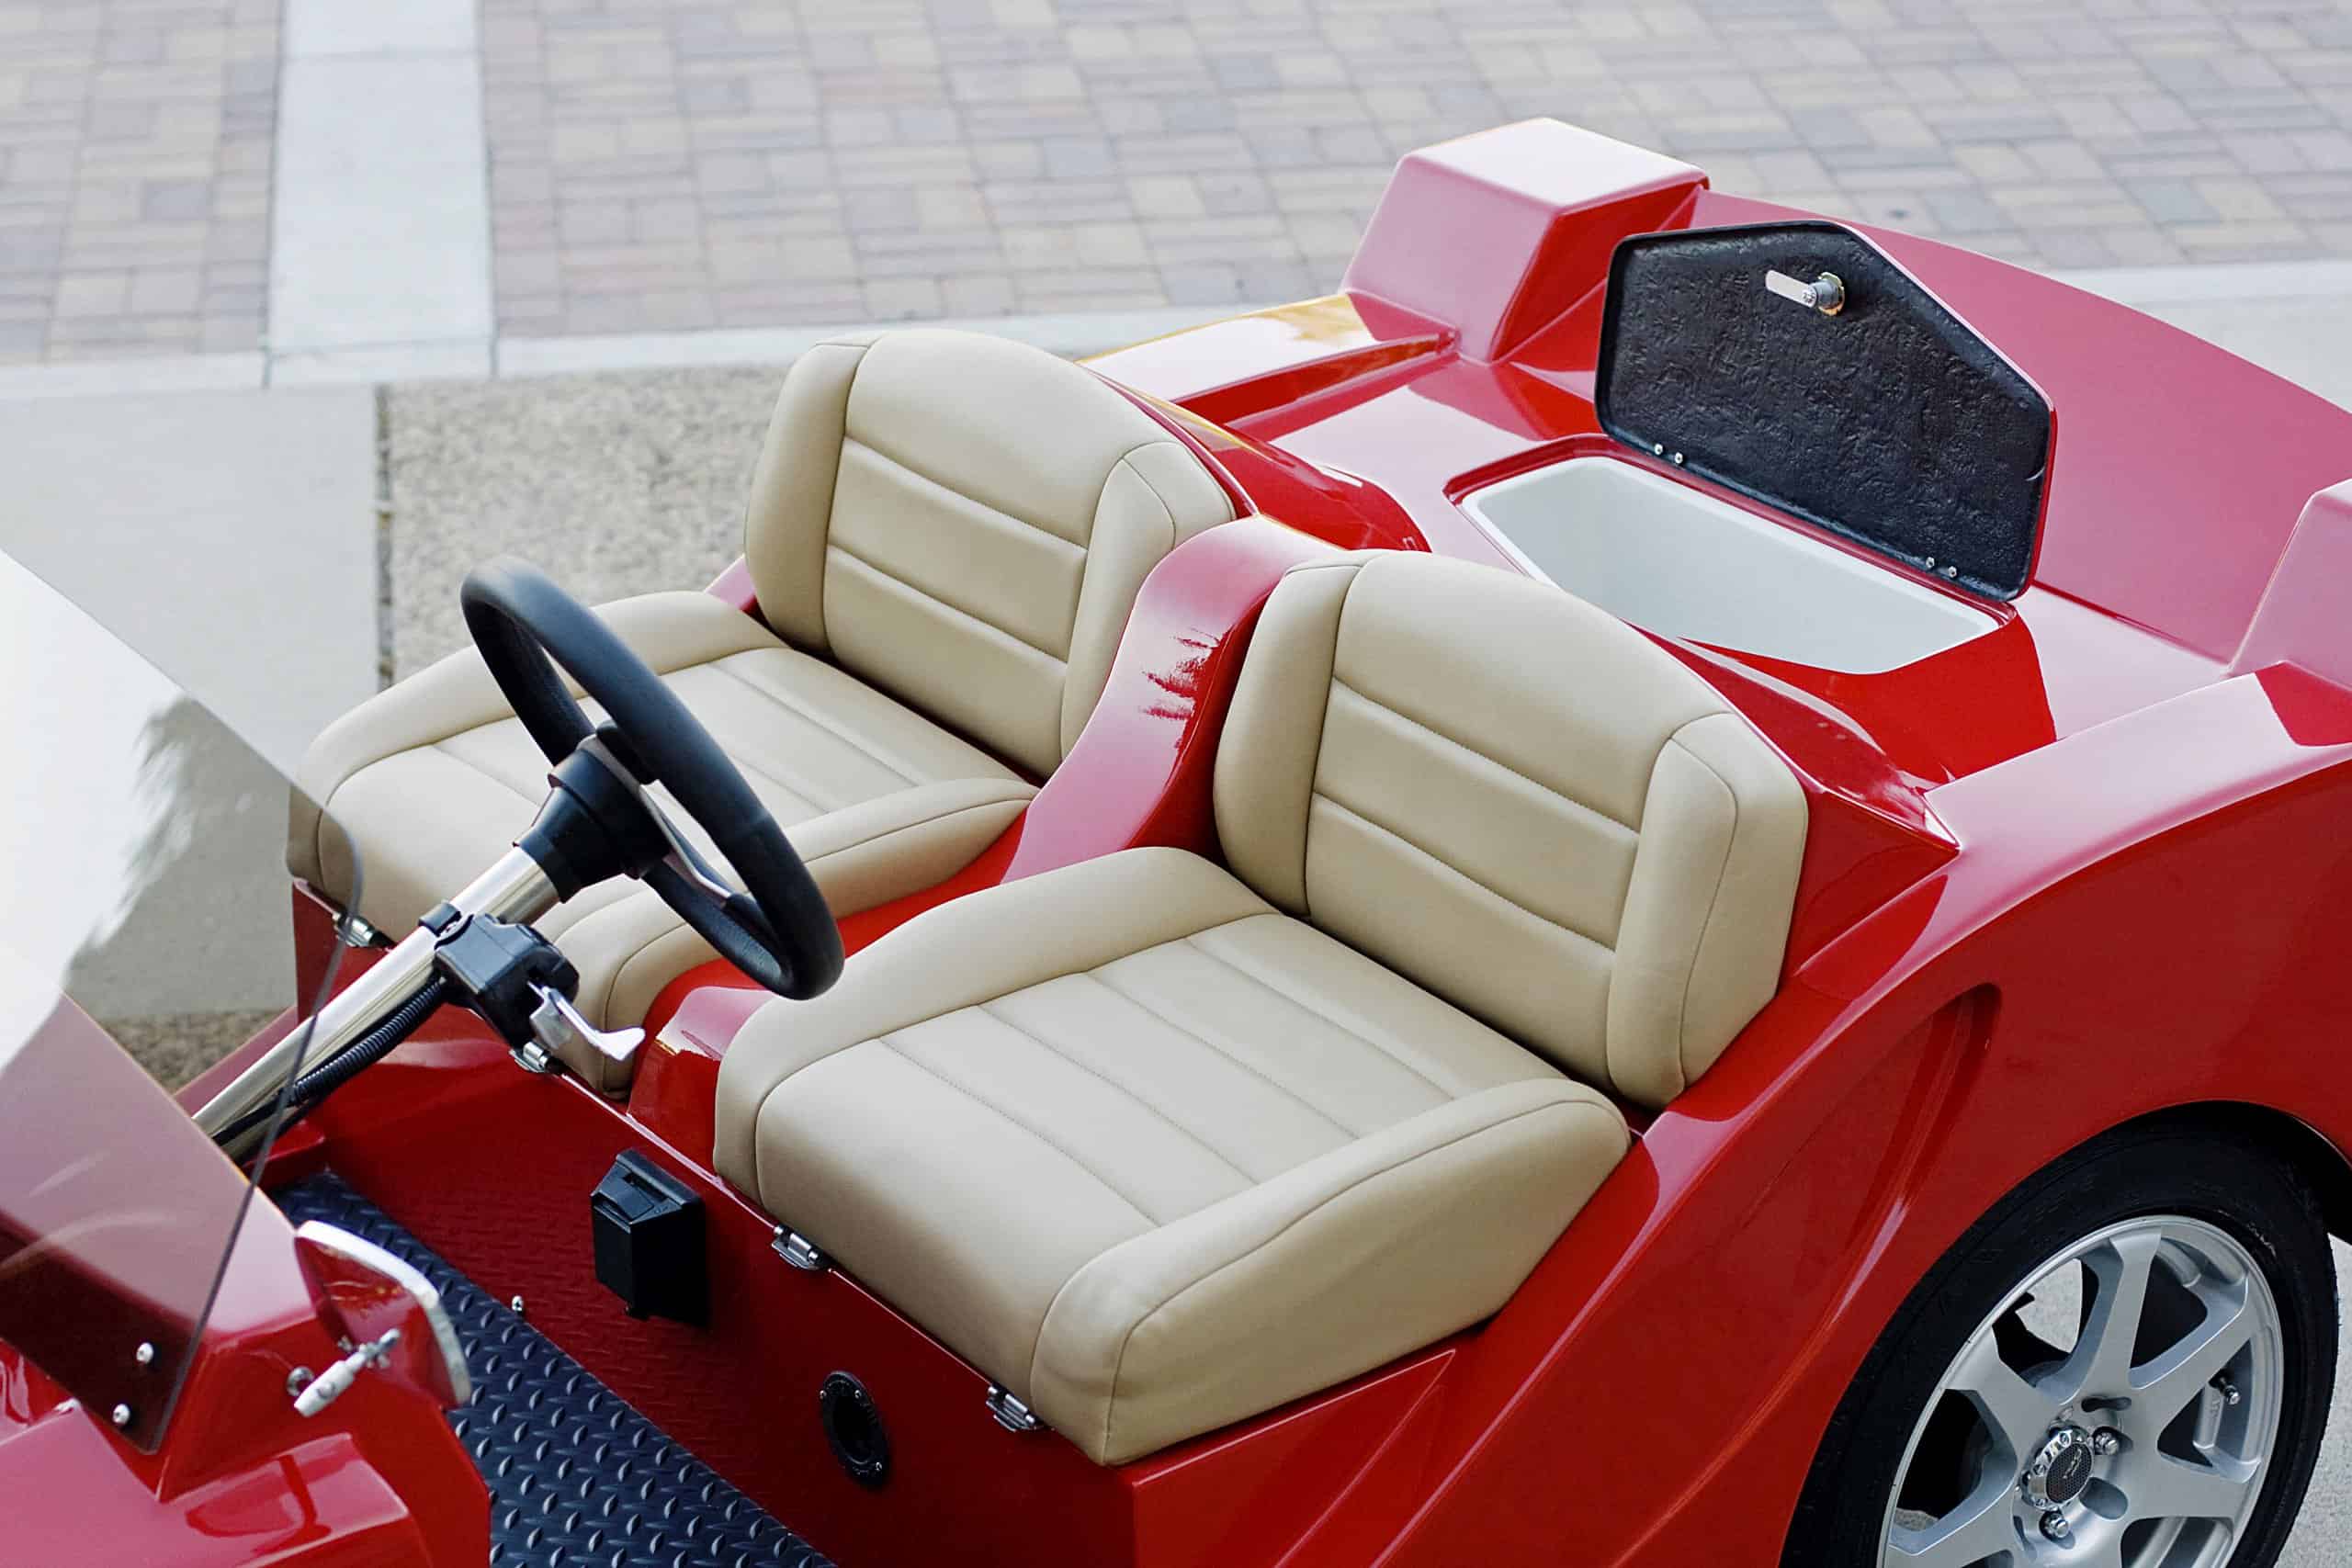 Ferrari, Cobra and more extravagant custom golf carts